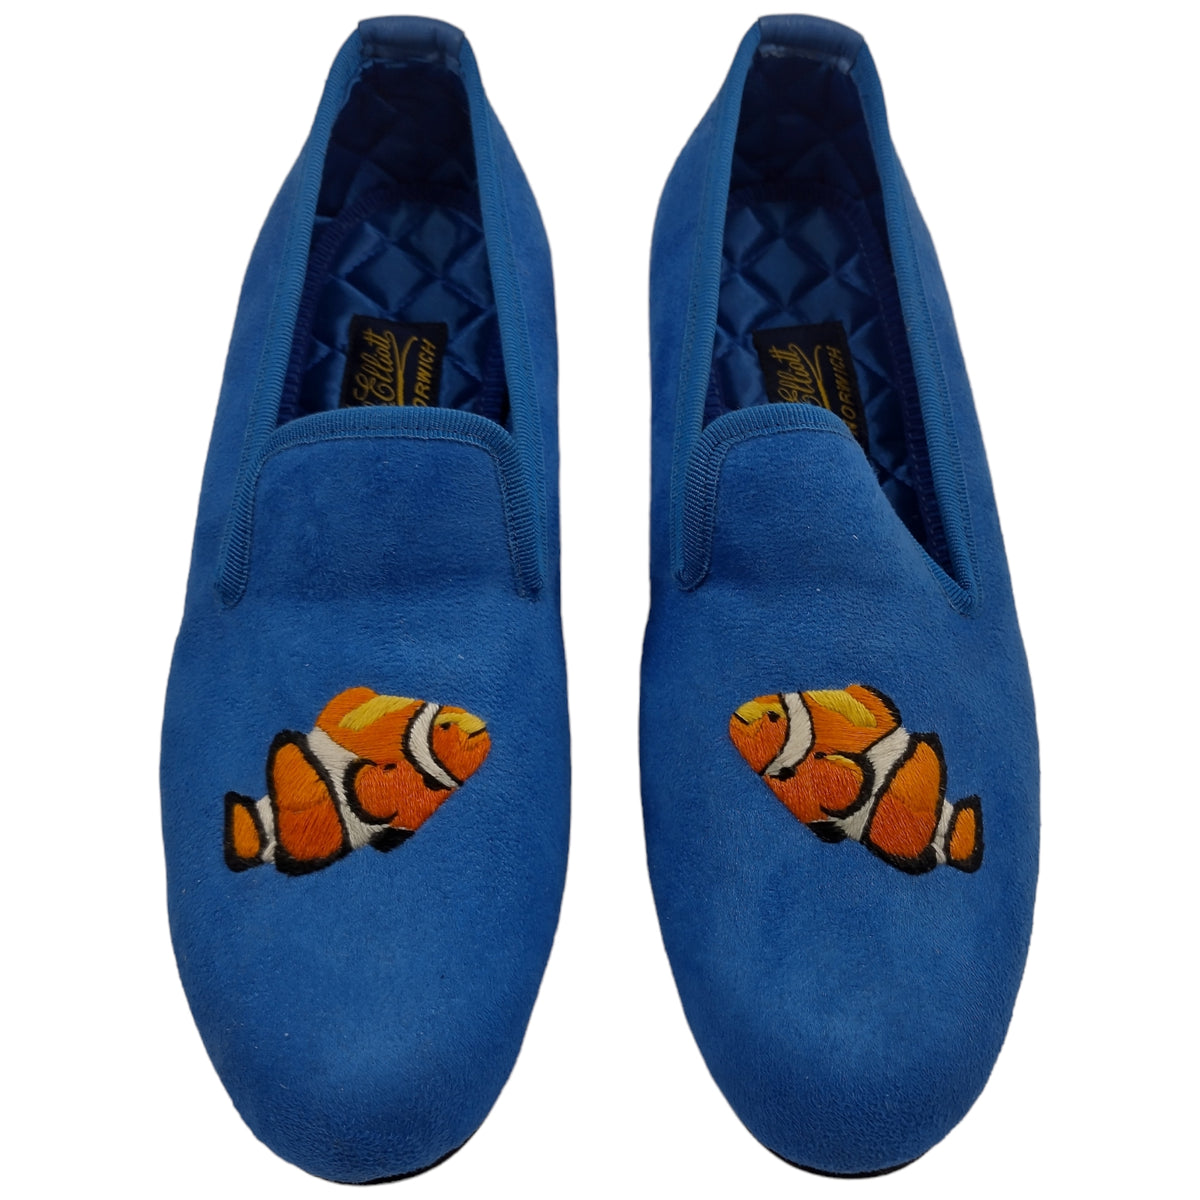 Bowhill & Elliott Blue Clown Fish Shoes